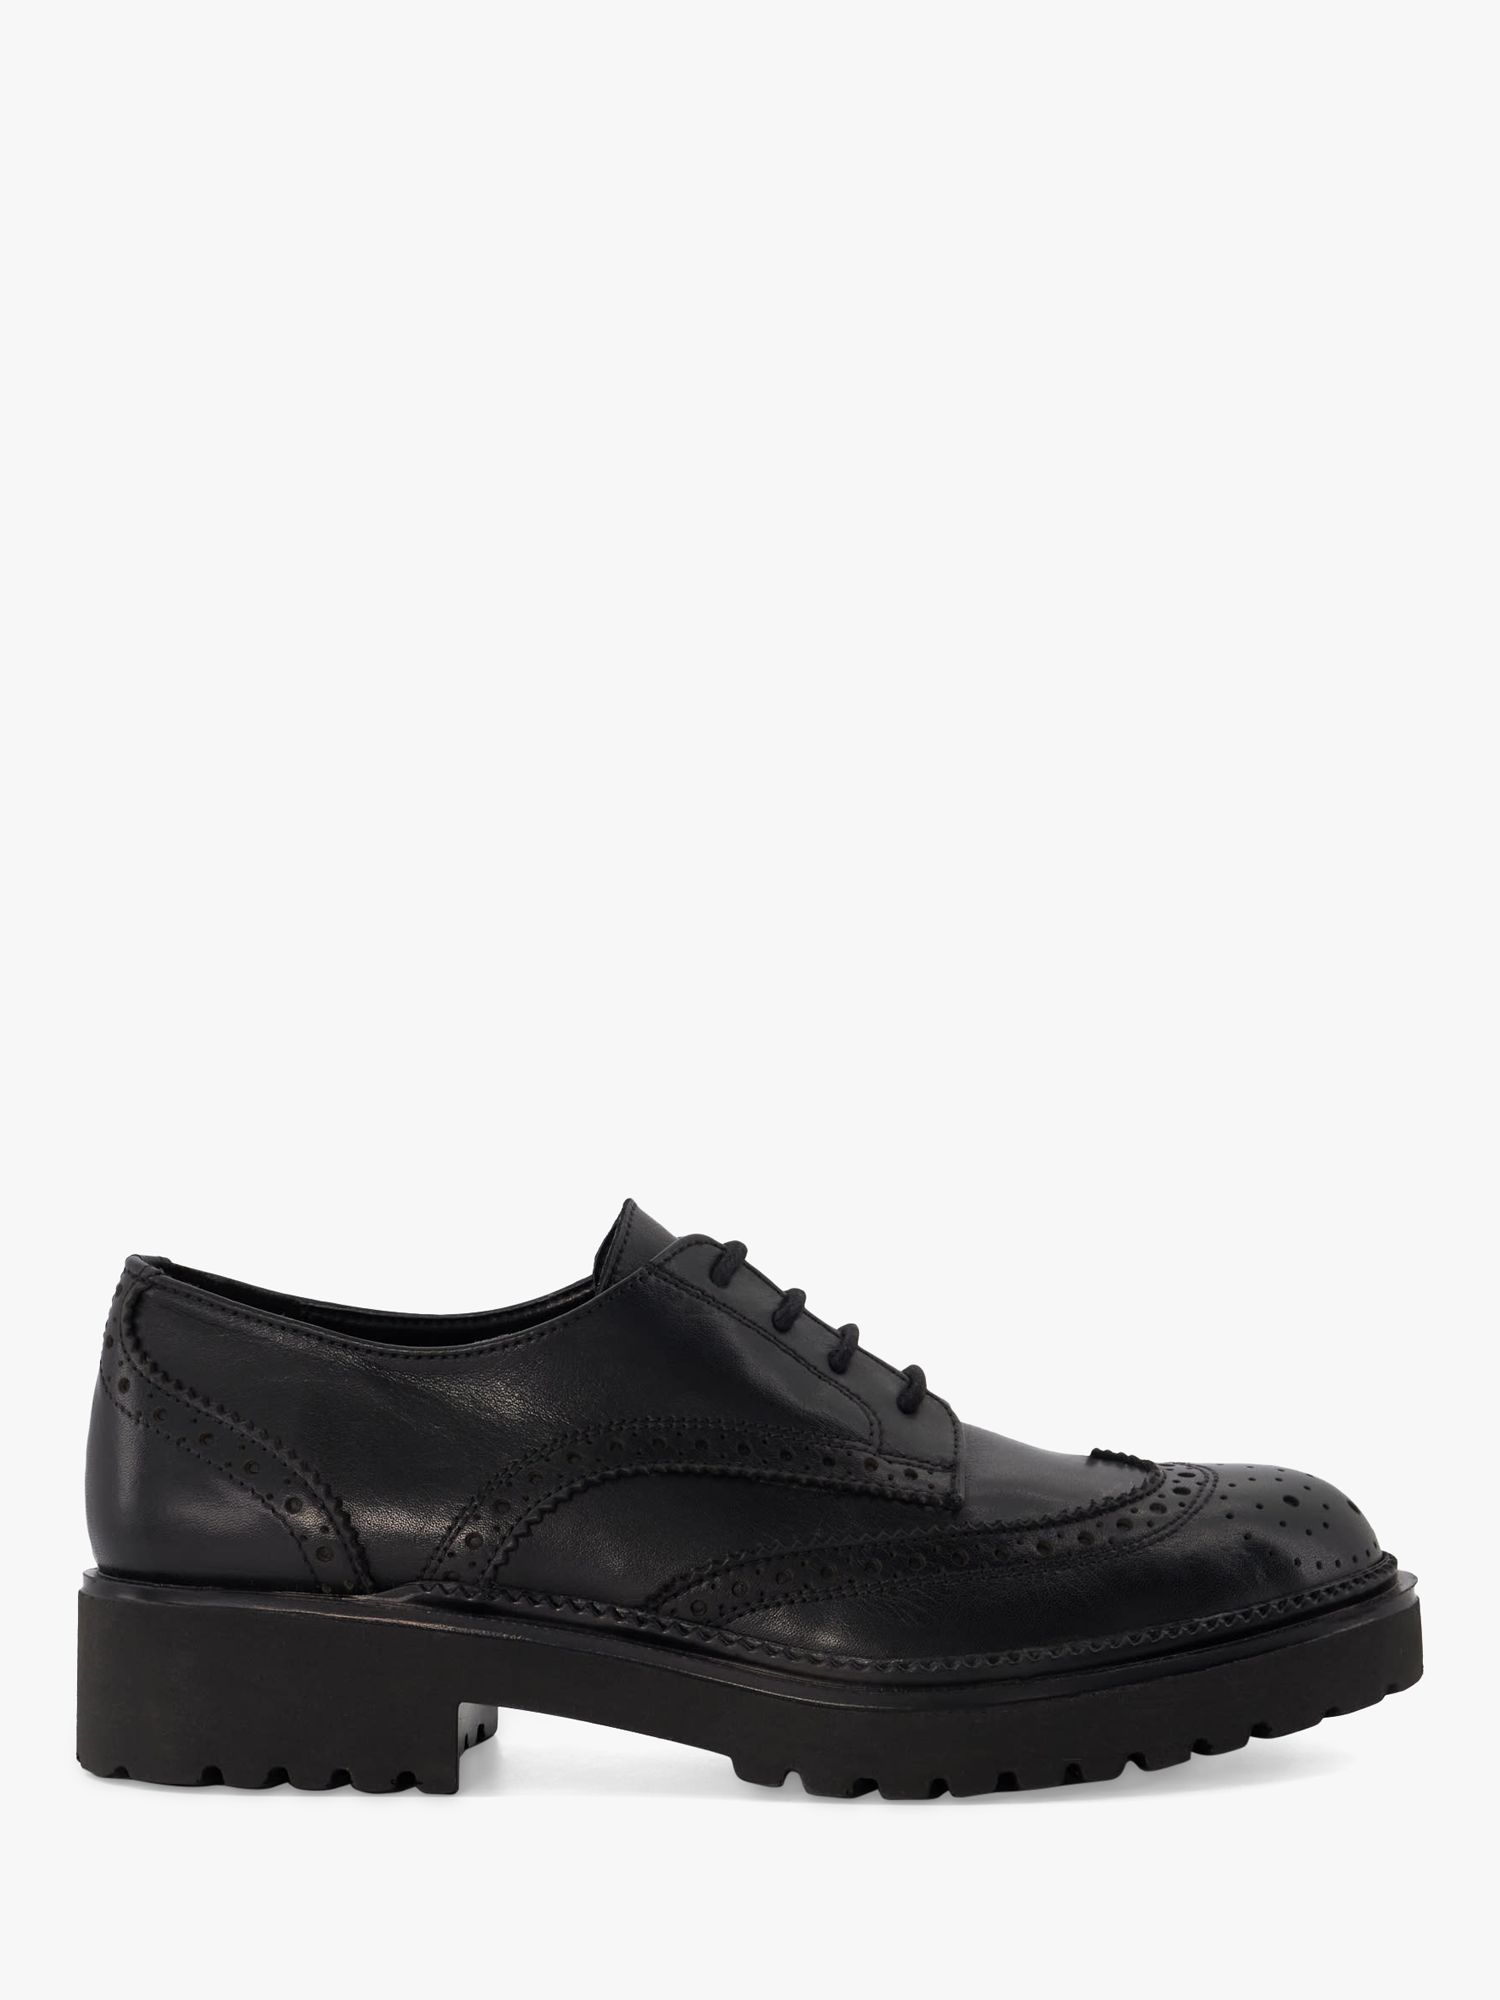 Dune Florian Leather Brogue Shoes, Black at John Lewis & Partners